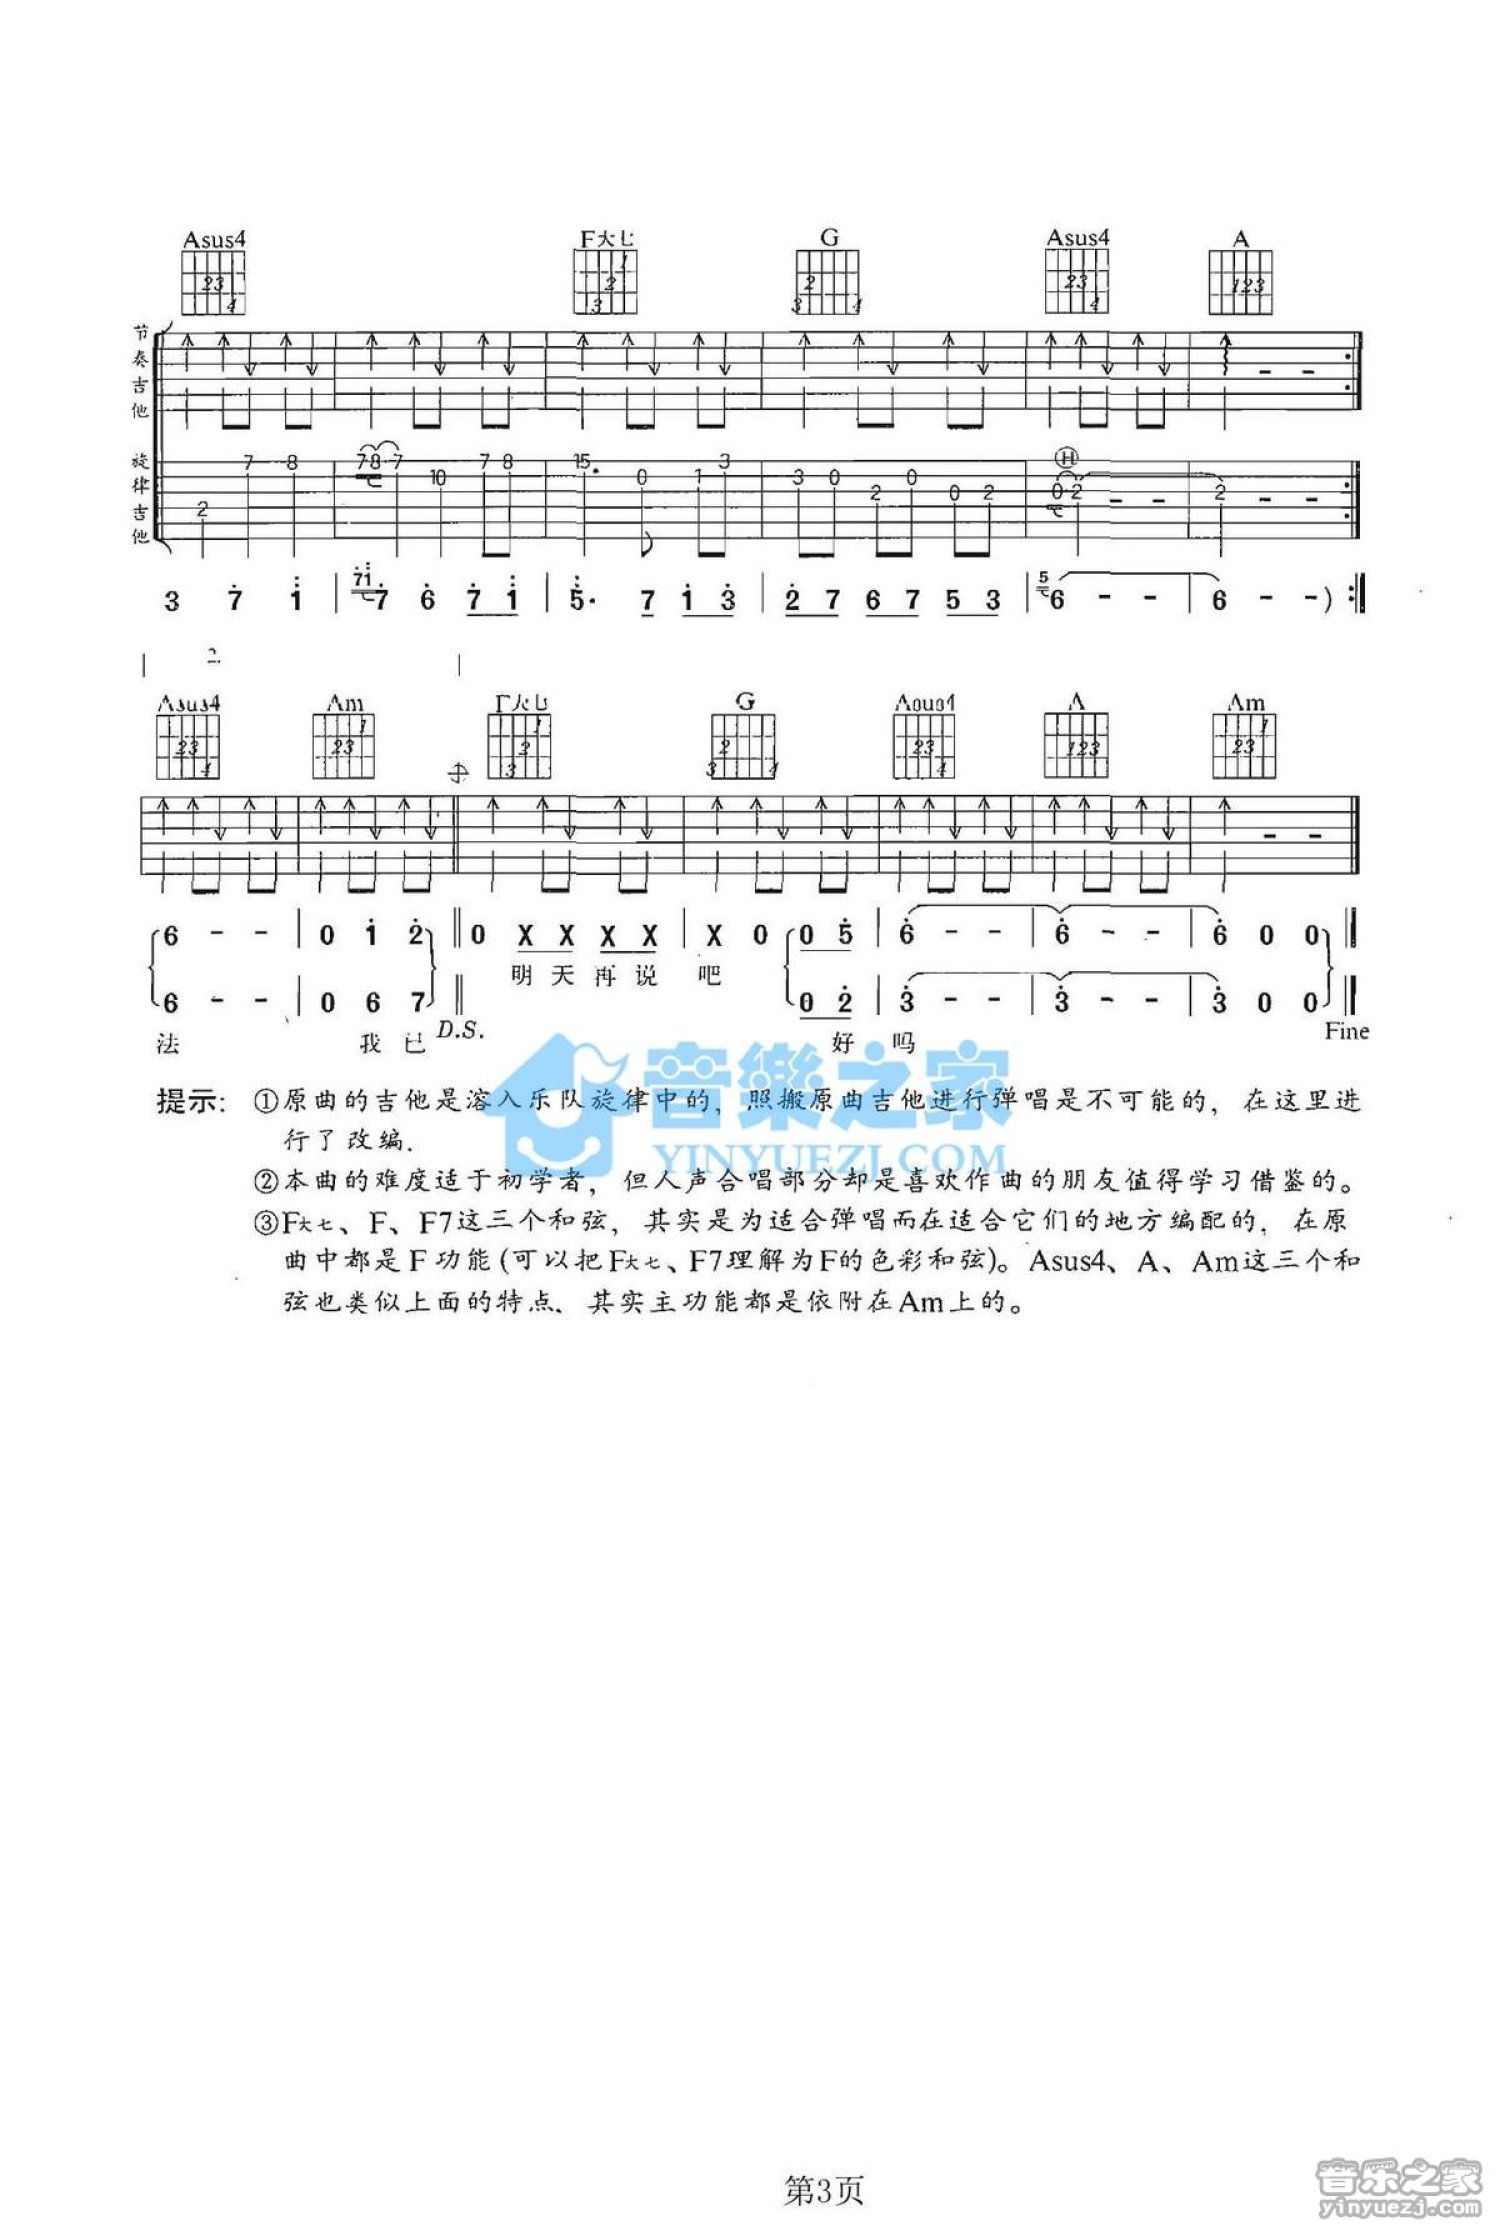 Metro 2033(地铁2033) - Guitar Song 1吉他谱(gtp谱)_动漫游戏(ACG)